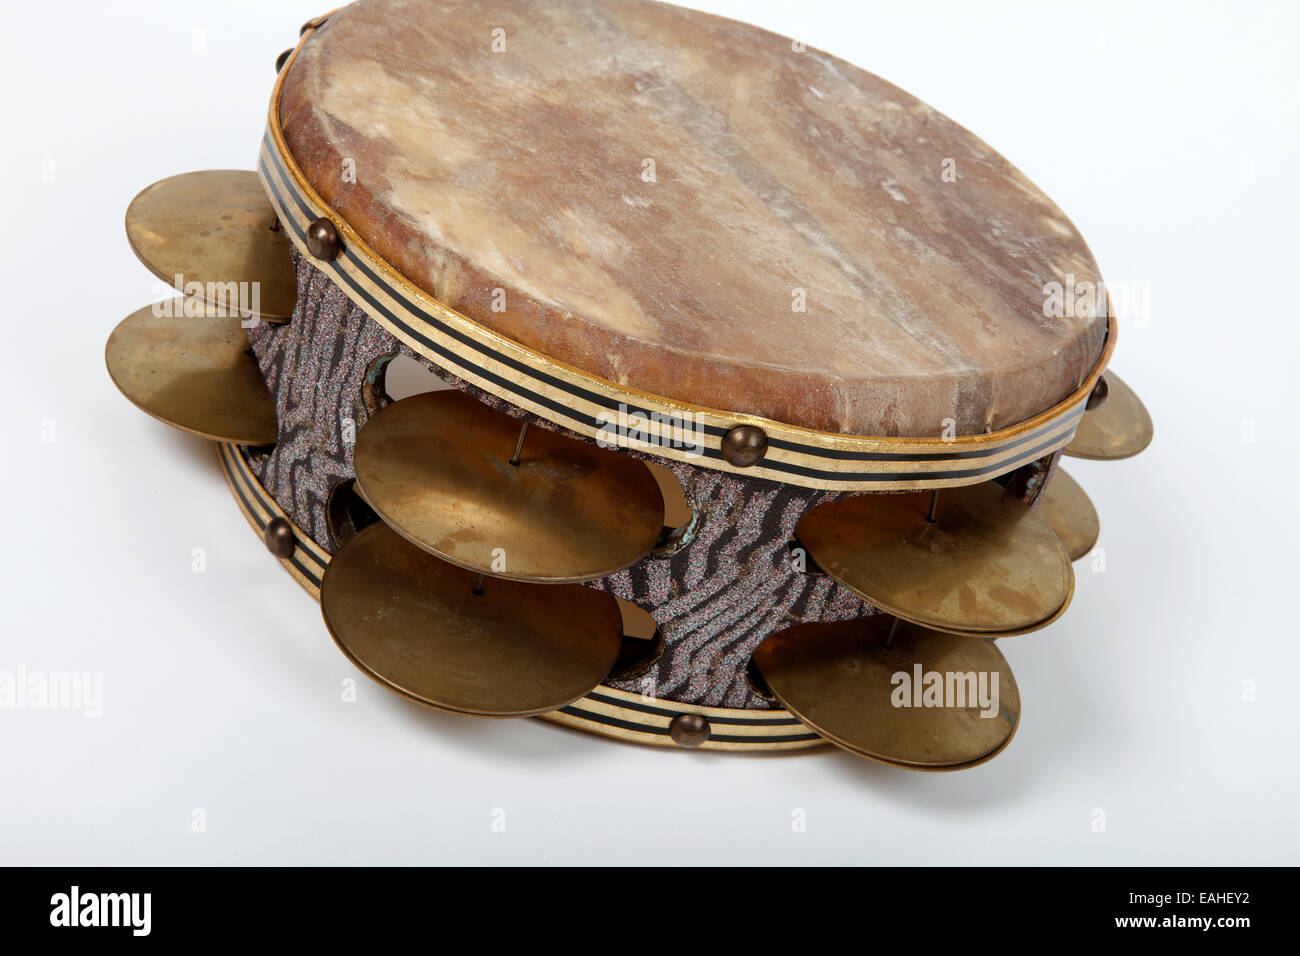 Large heavy Riq tambourine from Egypt, played balnaced on the leg Stock  Photo - Alamy